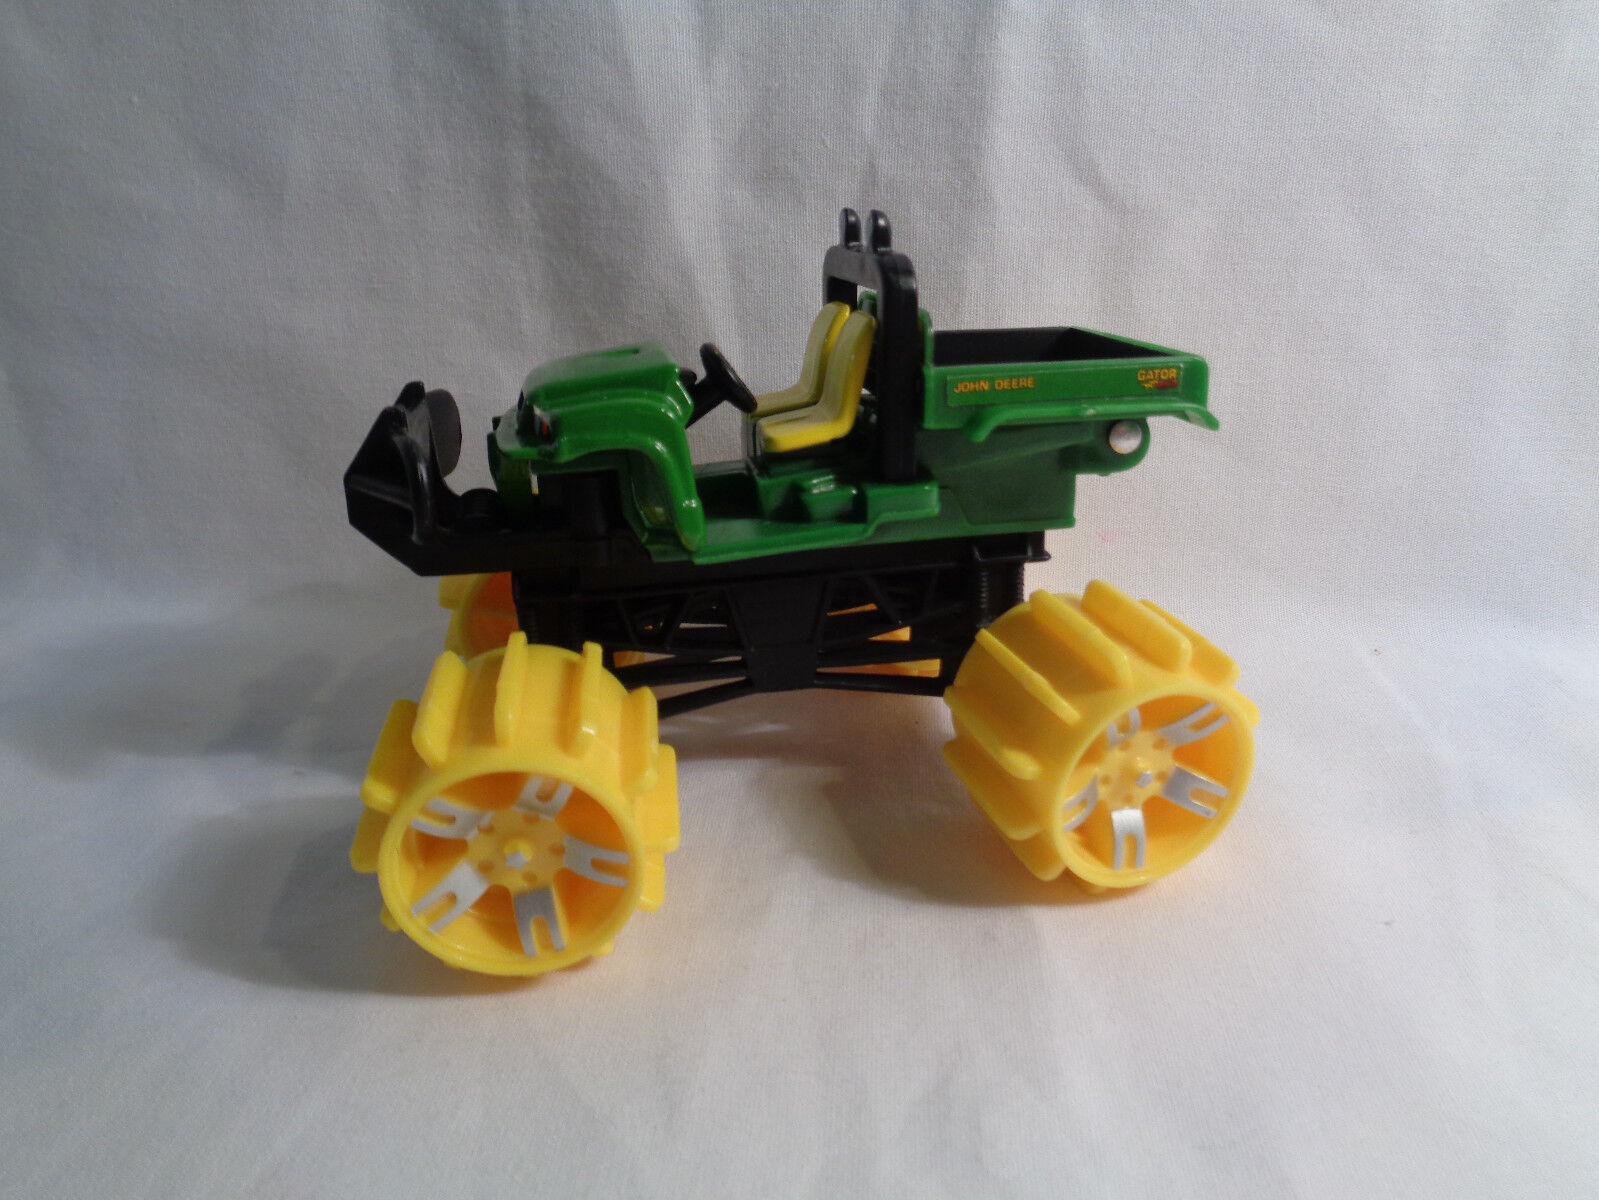 John Deere Farm Gator Tractor Toy Green Black Plastic - As Is - Missing Tires - $4.79